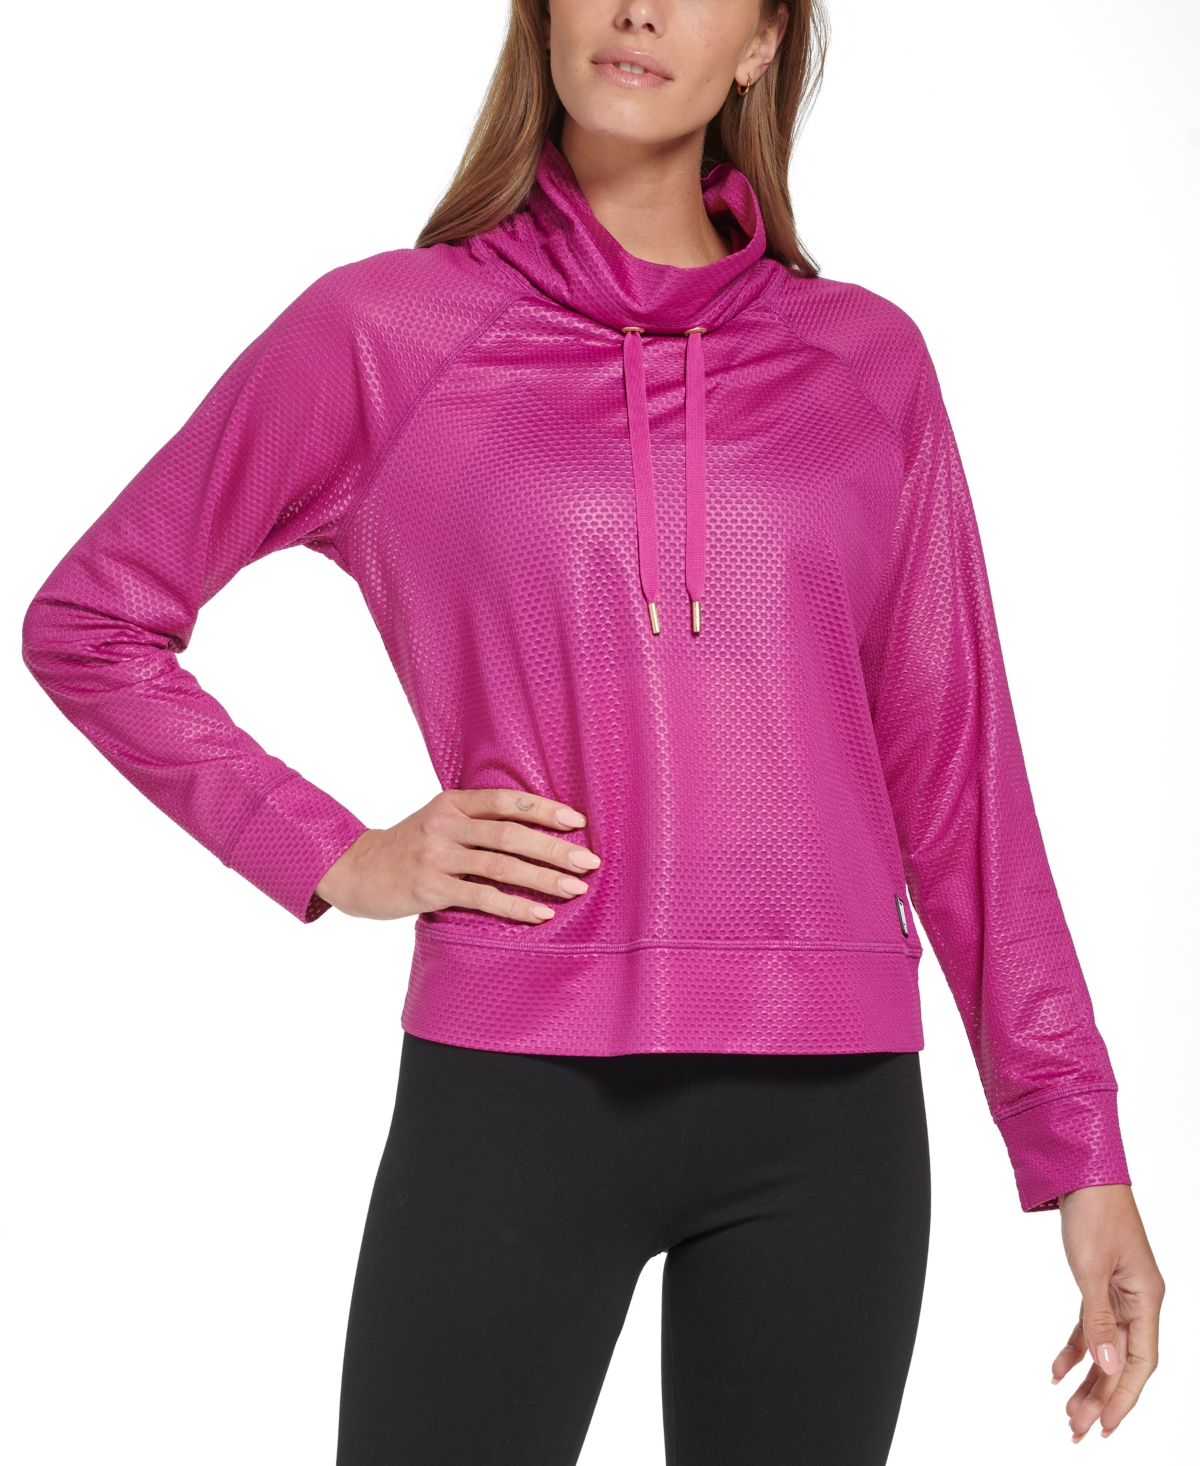  Dkny Sport Women's Honeycomb Mesh Funnel-Neck Sweatshirt